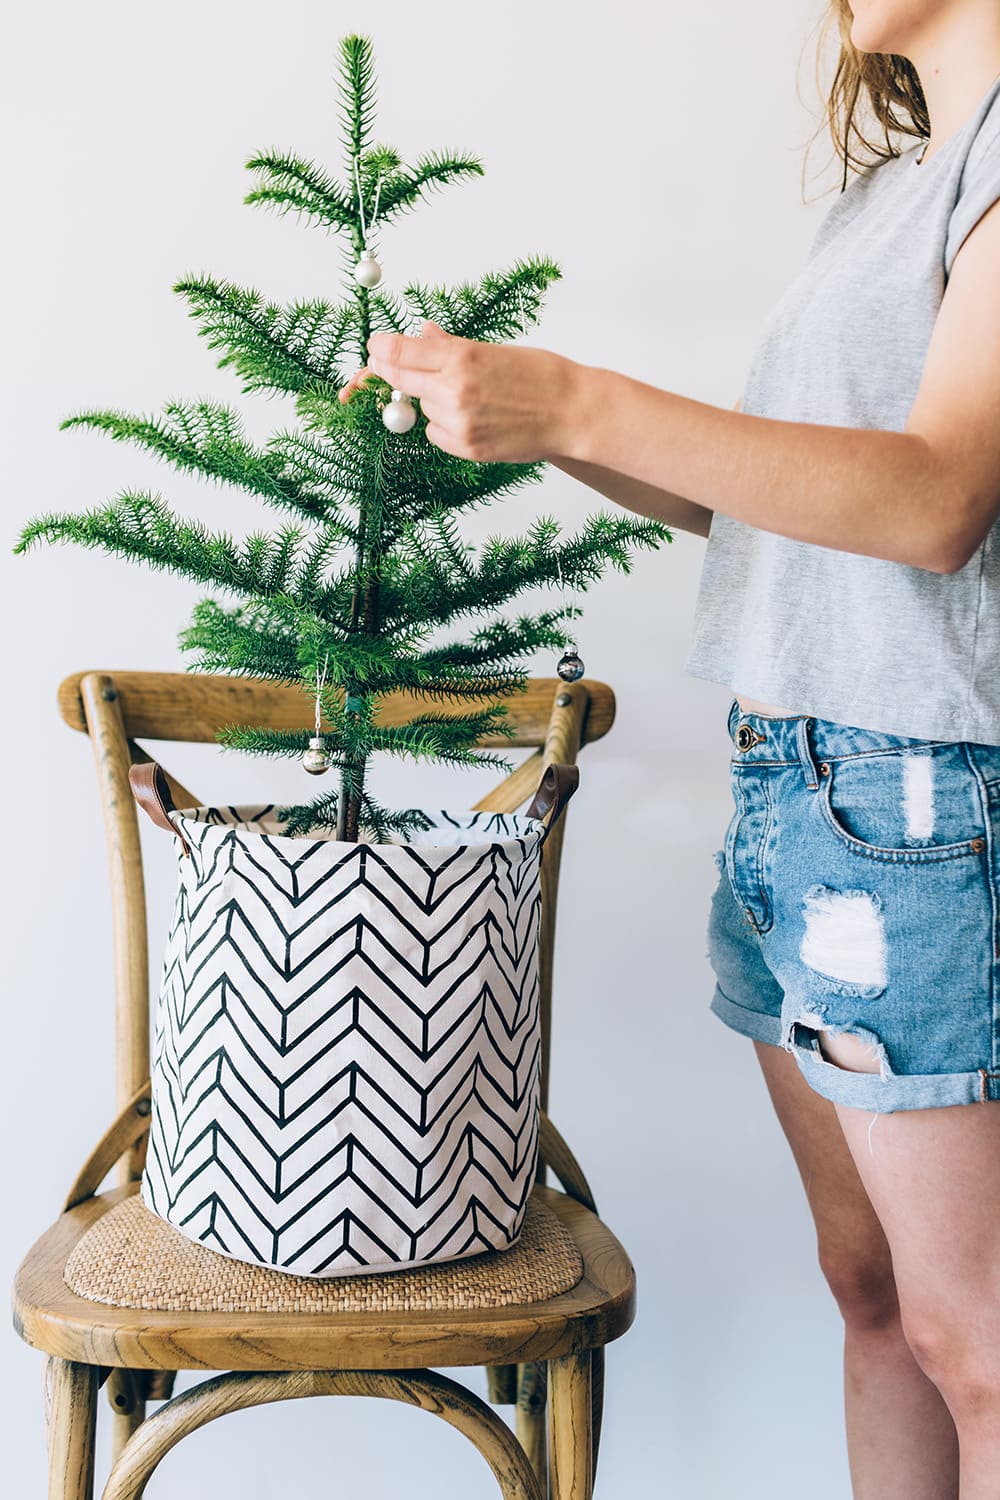 Teenage Girl Decorating Small Norfolk Island Pine Christmas Tree In Canvas Basket - Vertical